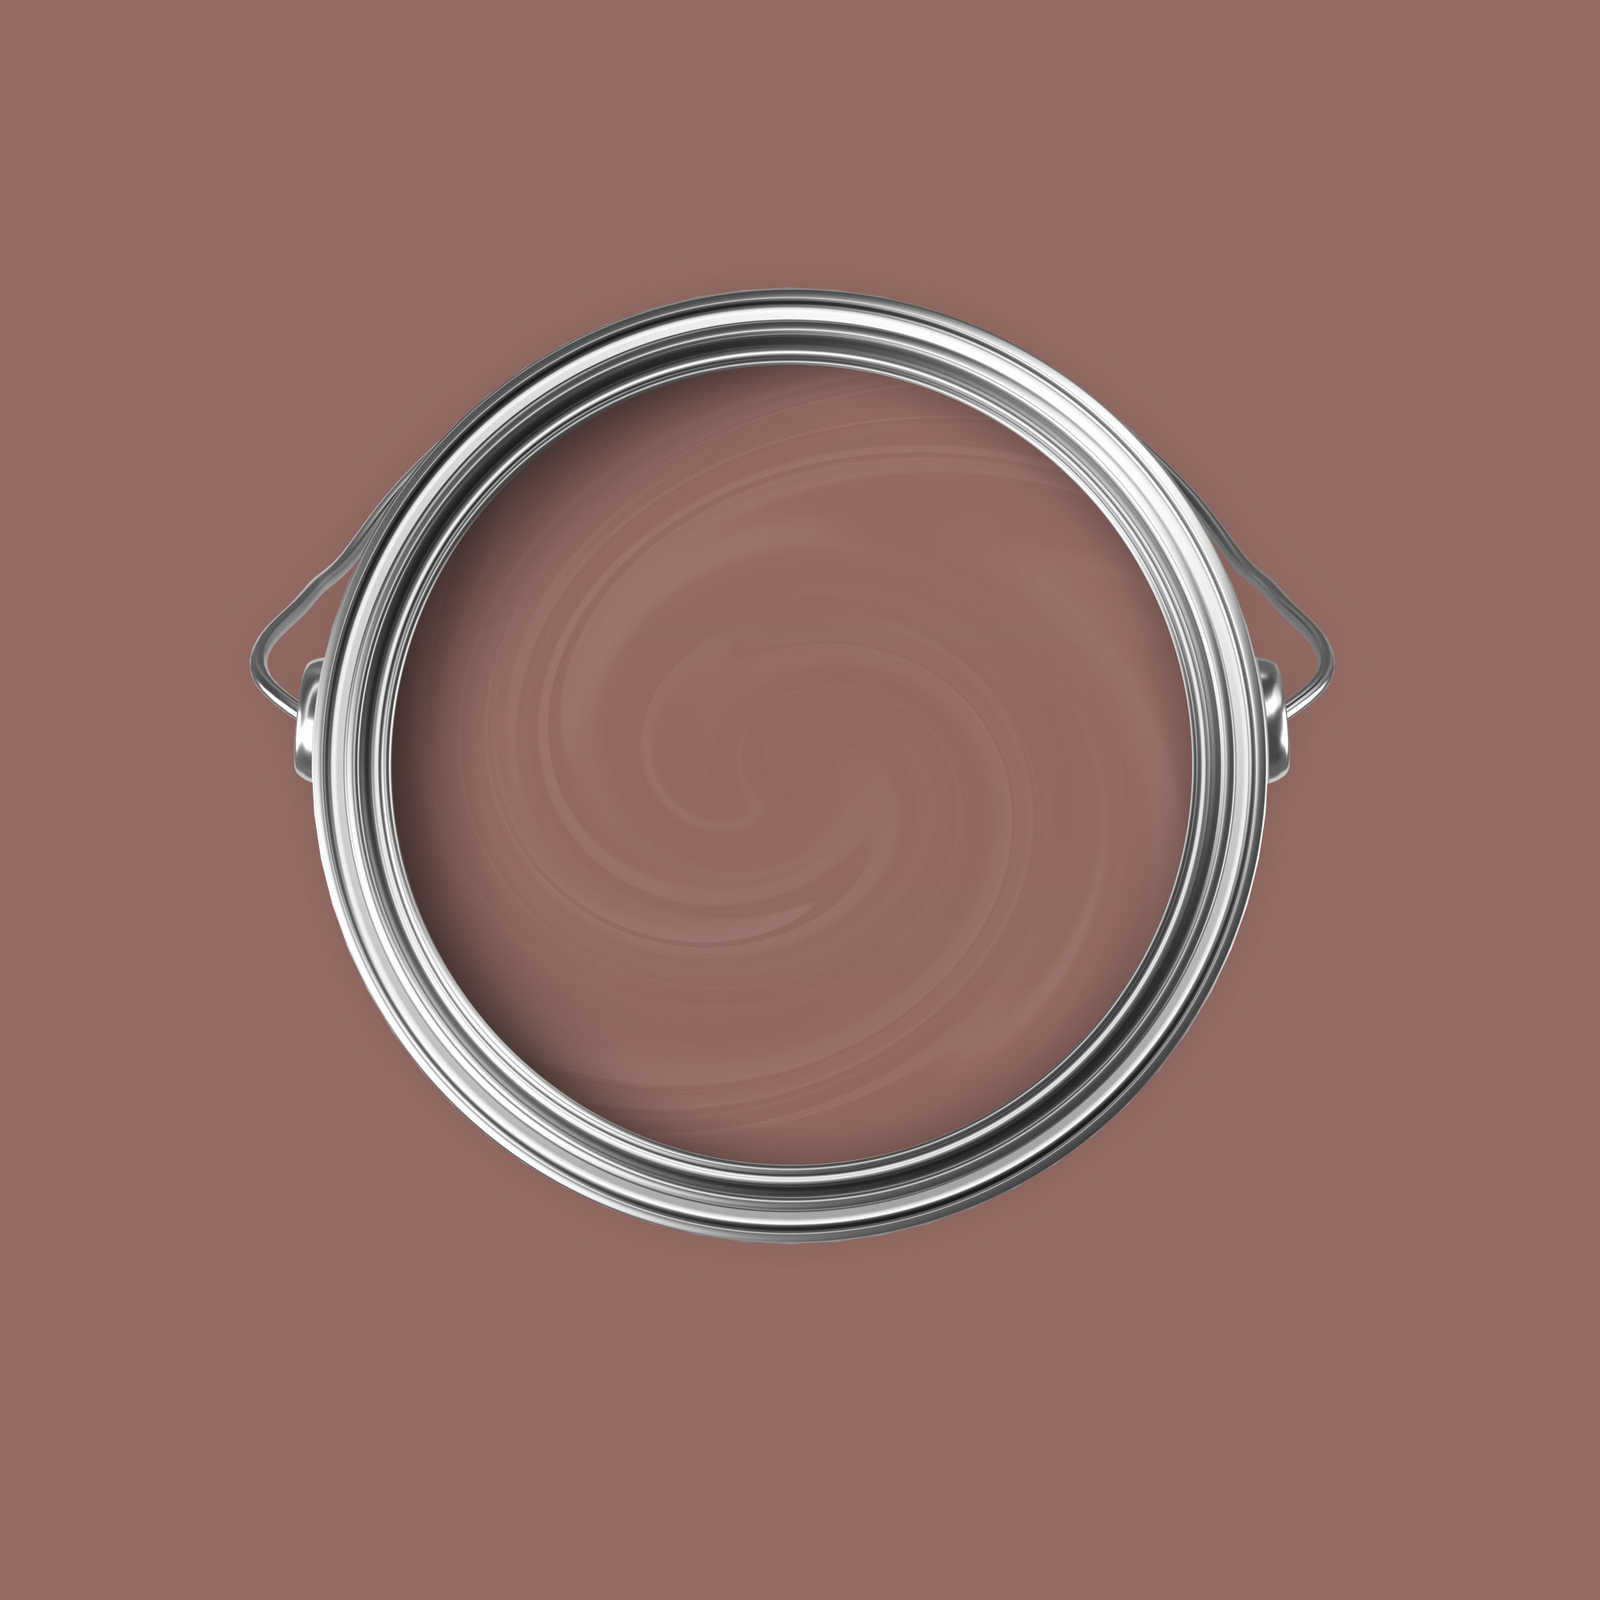             Premium Wandfarbe natürliches Dunkelrosa »Natural Nude« NW1012 – 5 Liter
        